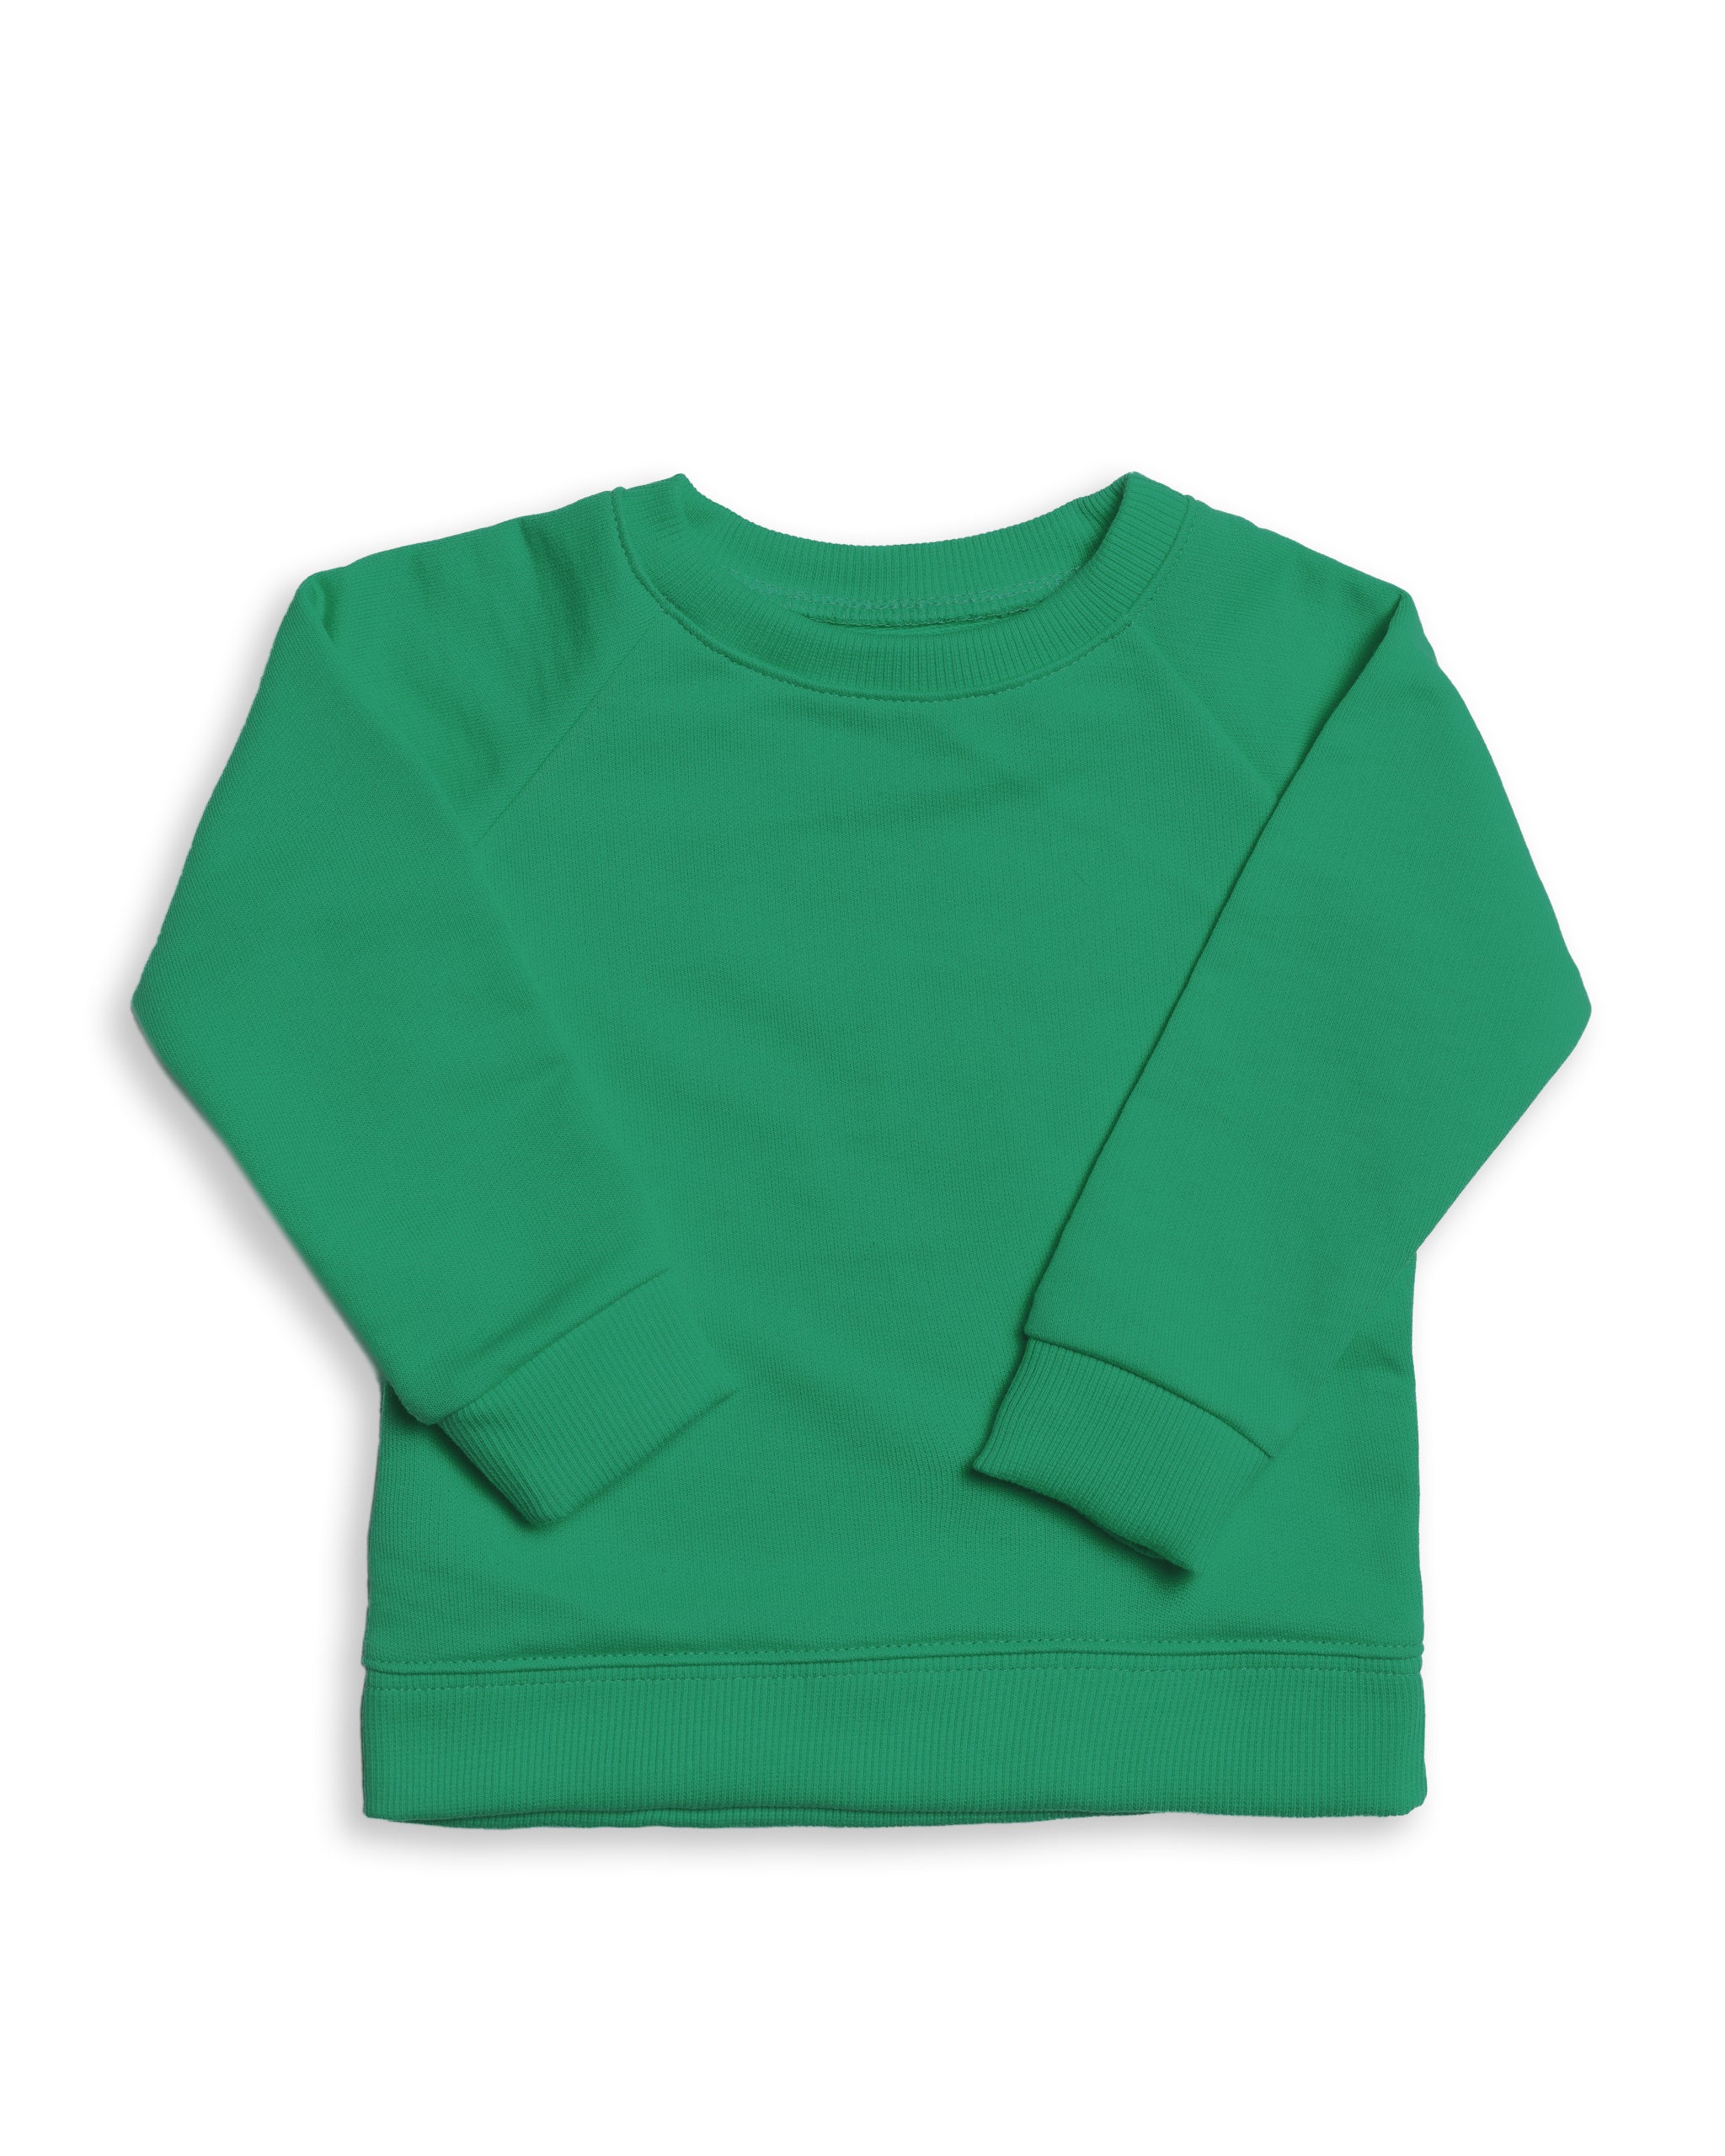 The Organic Pullover Sweatshirt [Jelly Bean]